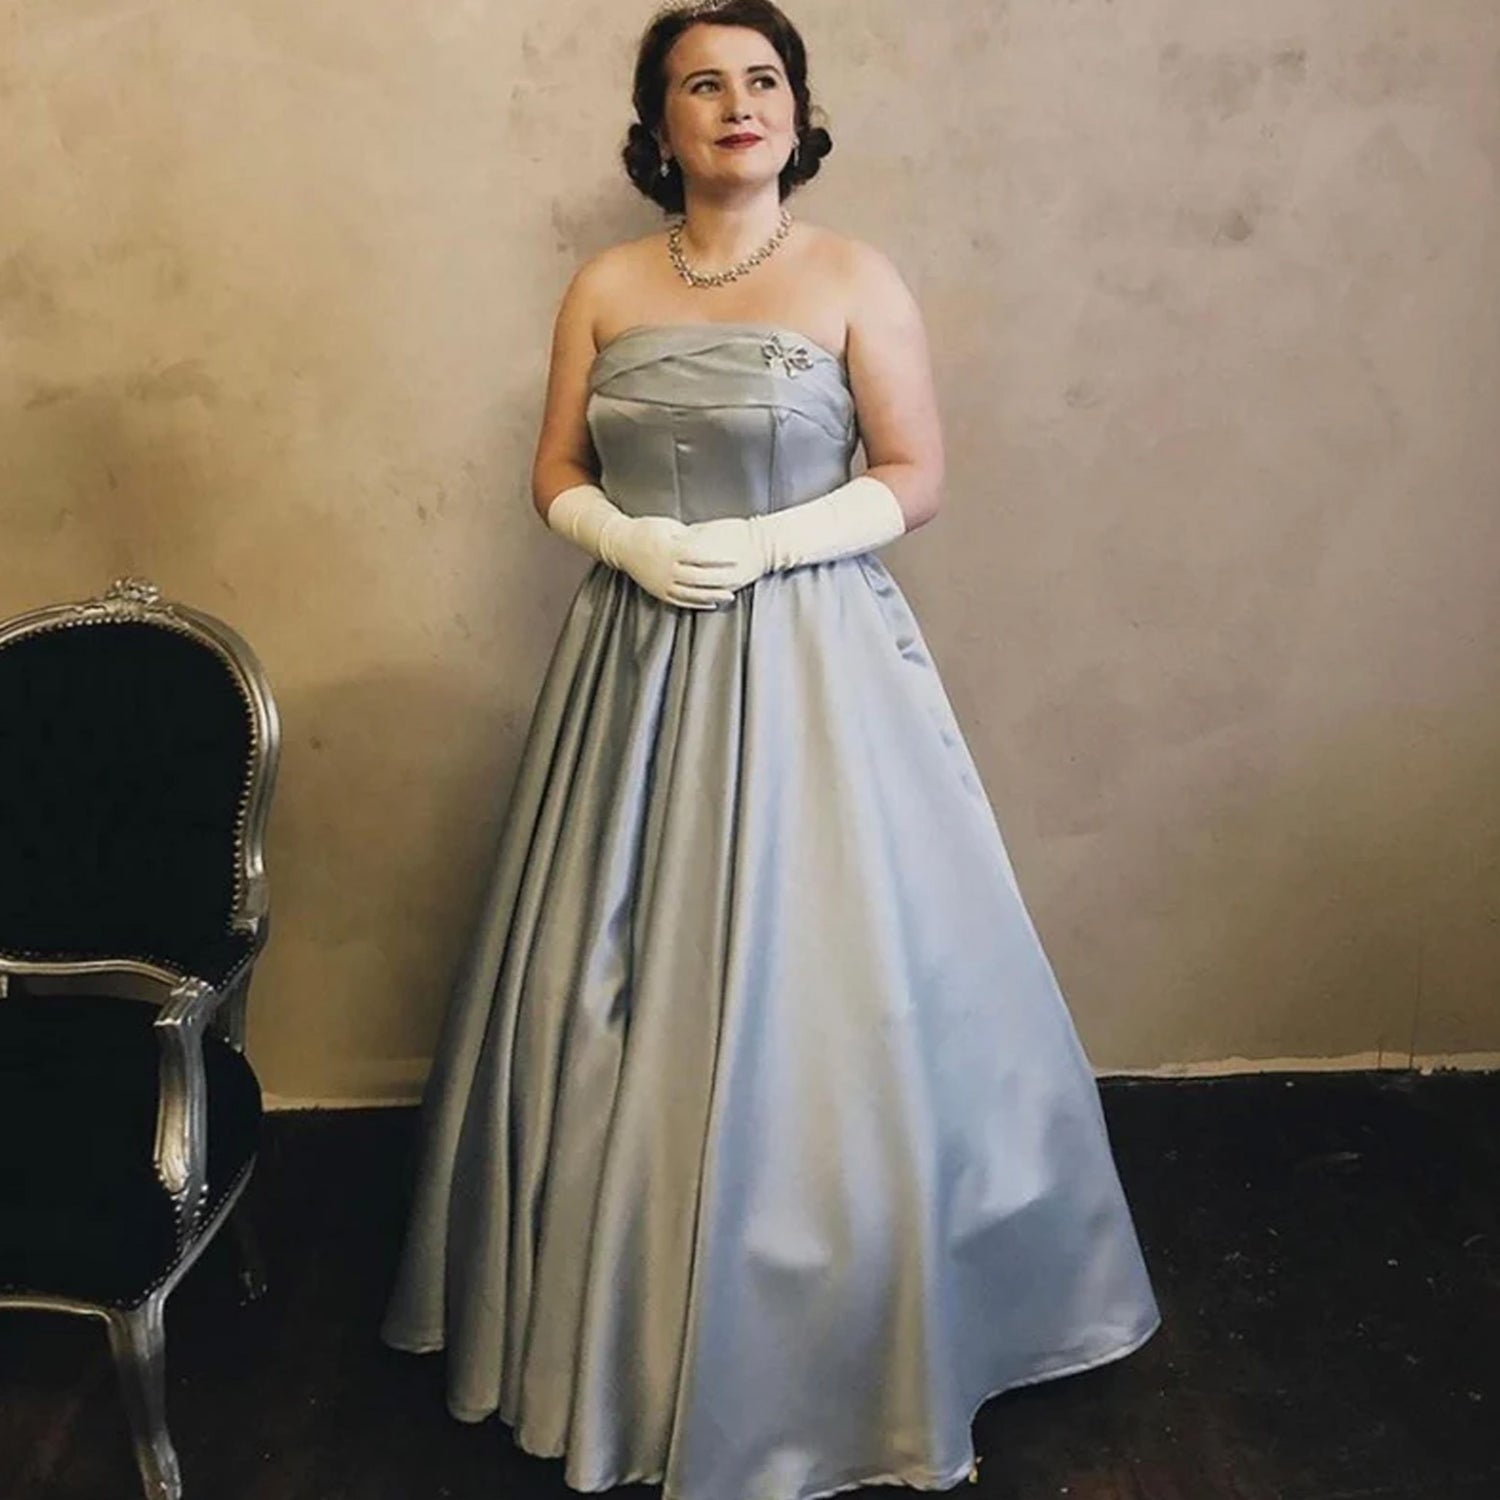 Dua Lipa wears sheer white dress to Jacquemus designer's wedding